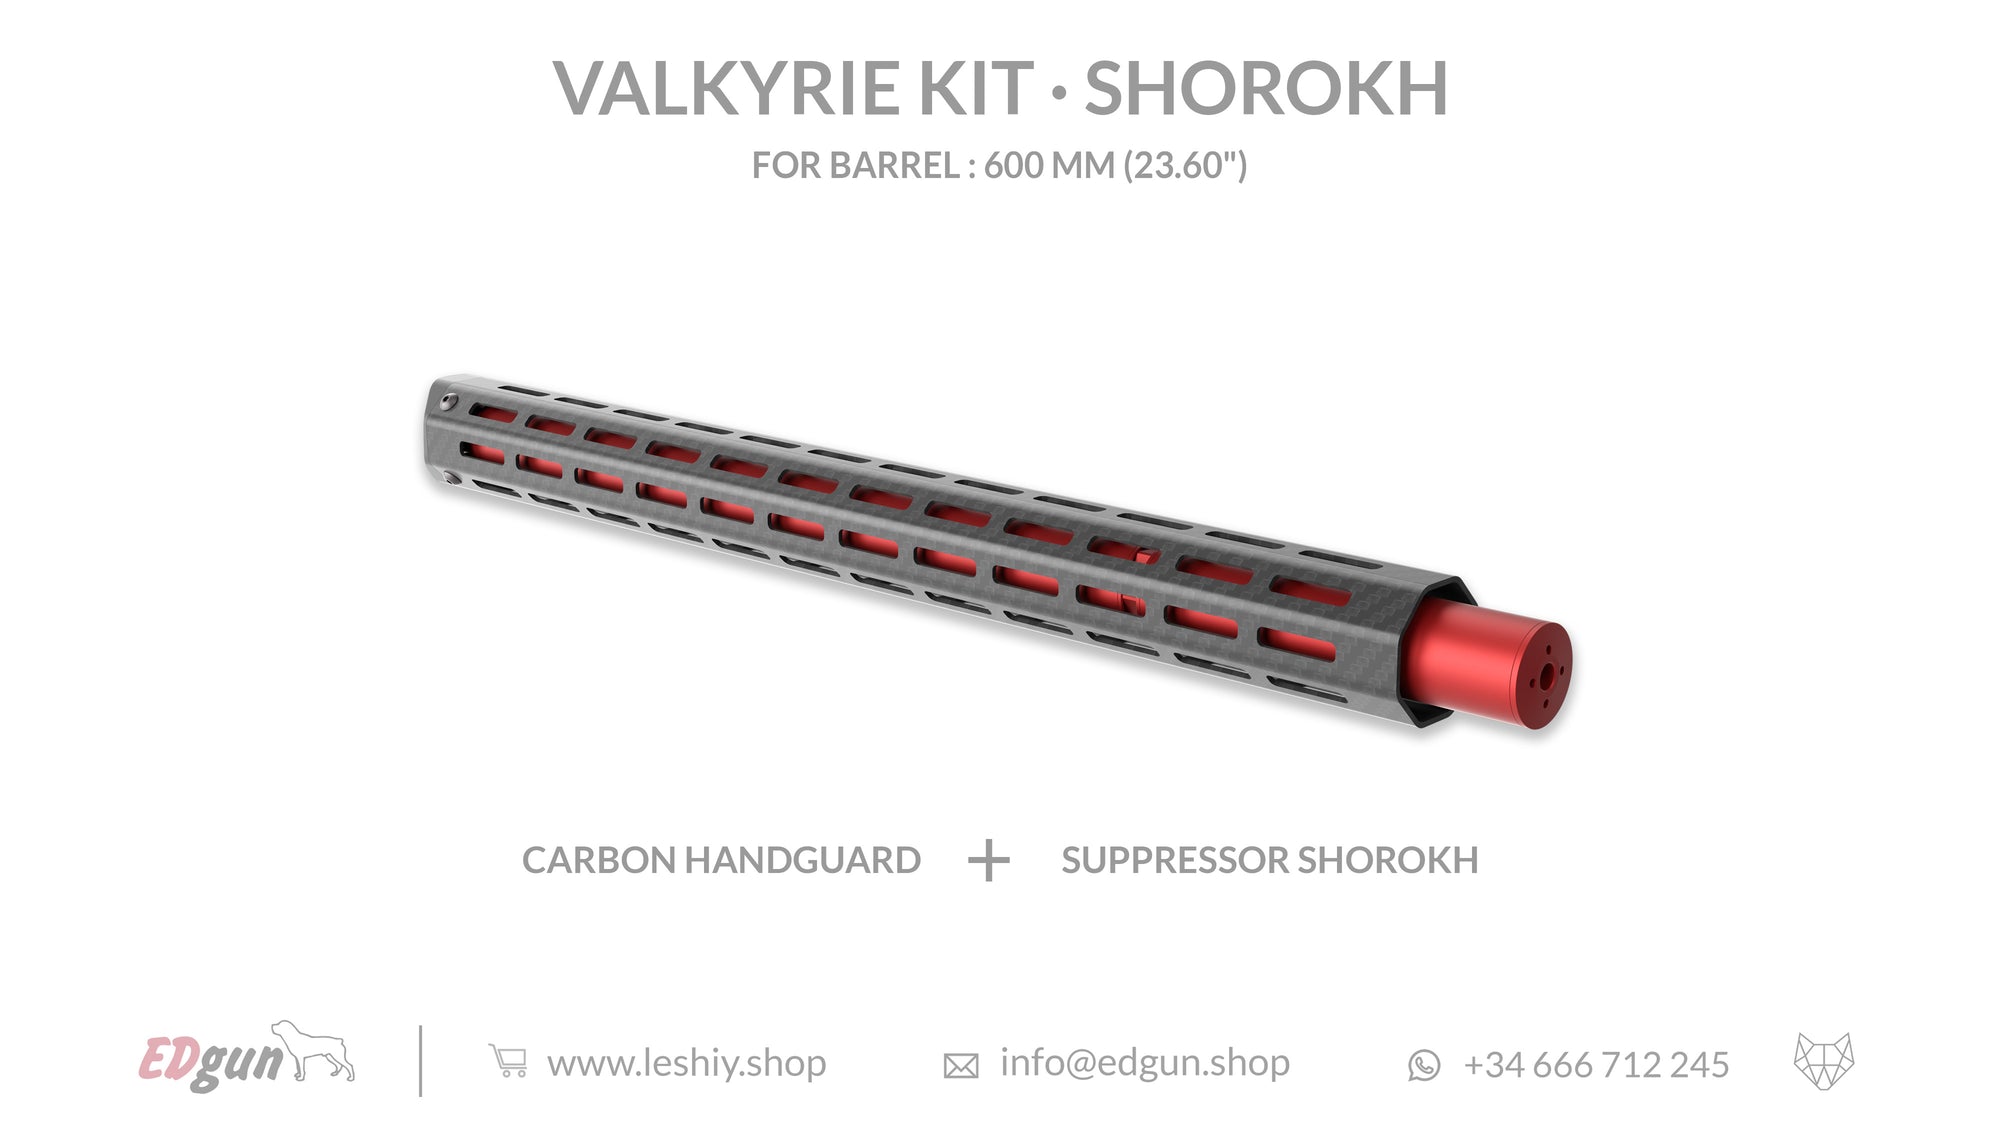 Valkyrie Kit Shorokh for barrel 600mm (23.60¨)